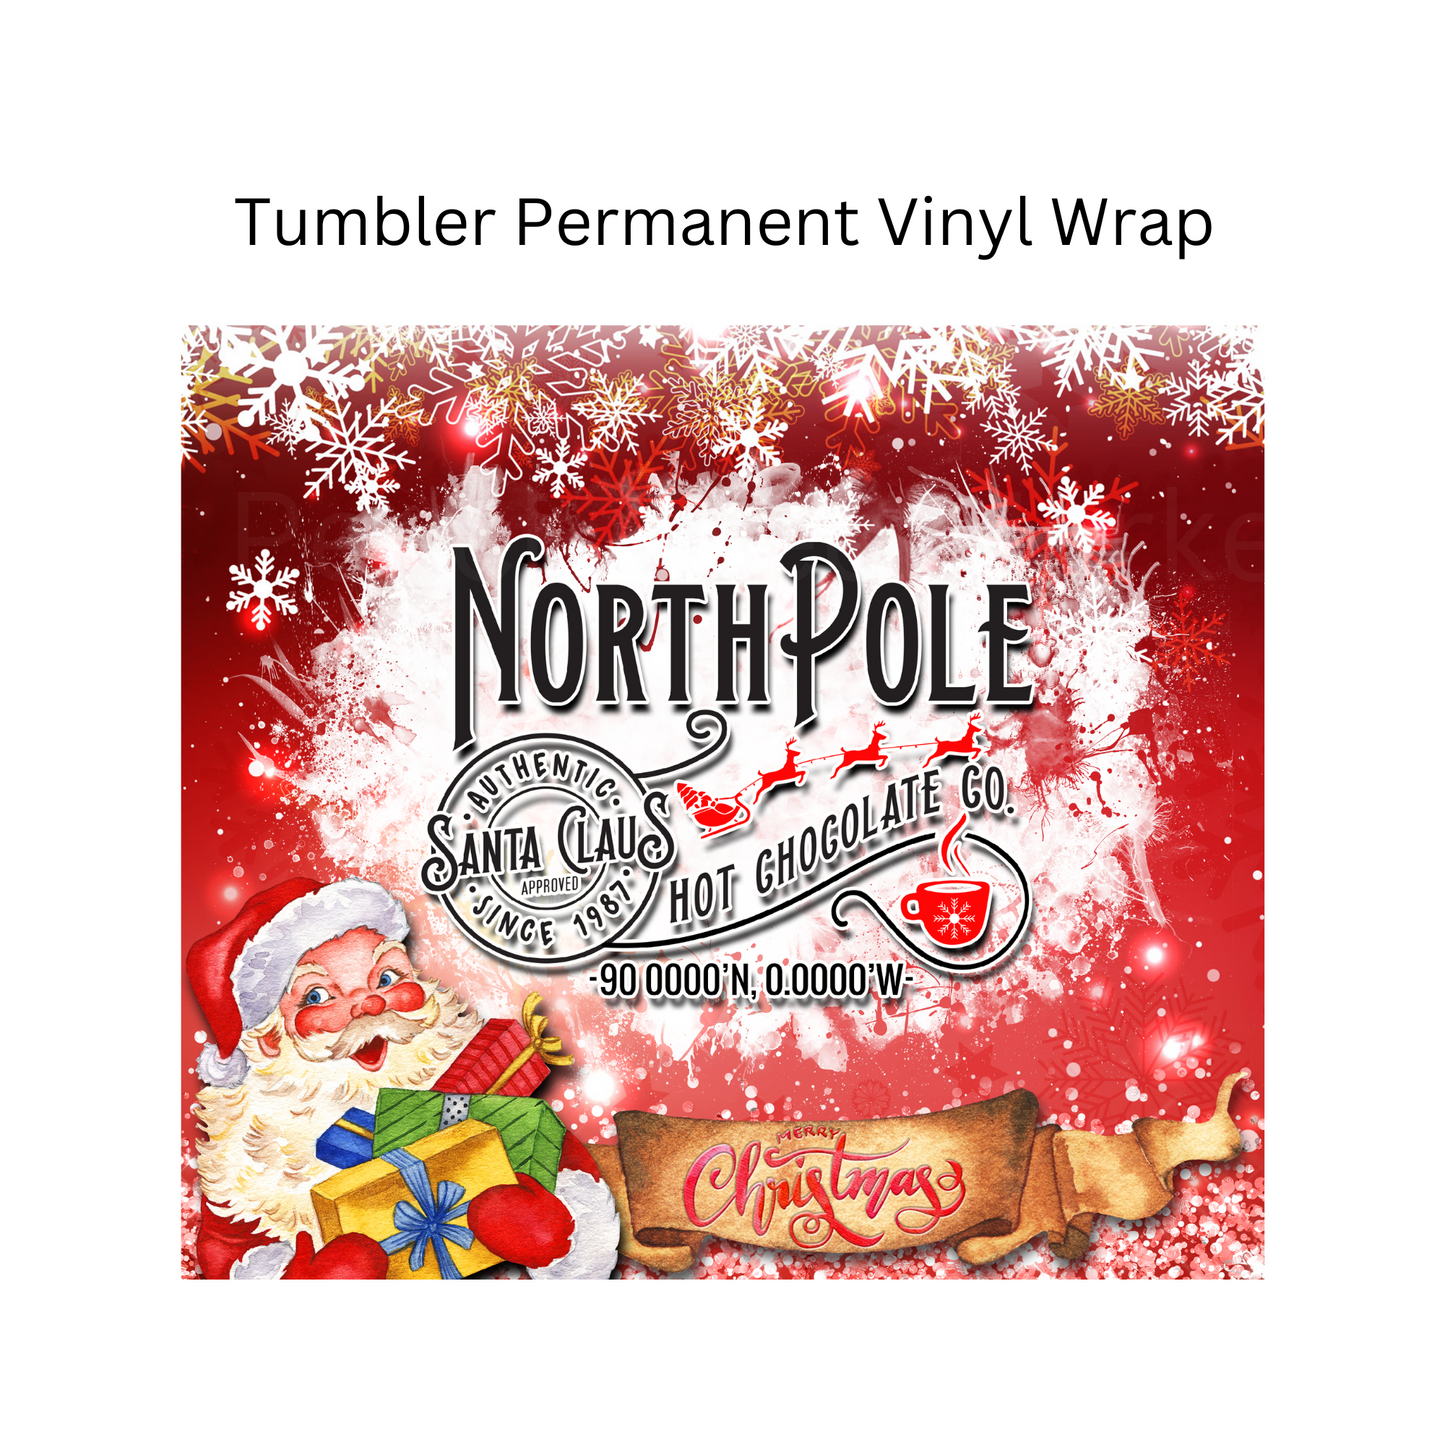 North Pole Tumbler Permanent Vinyl Wrap